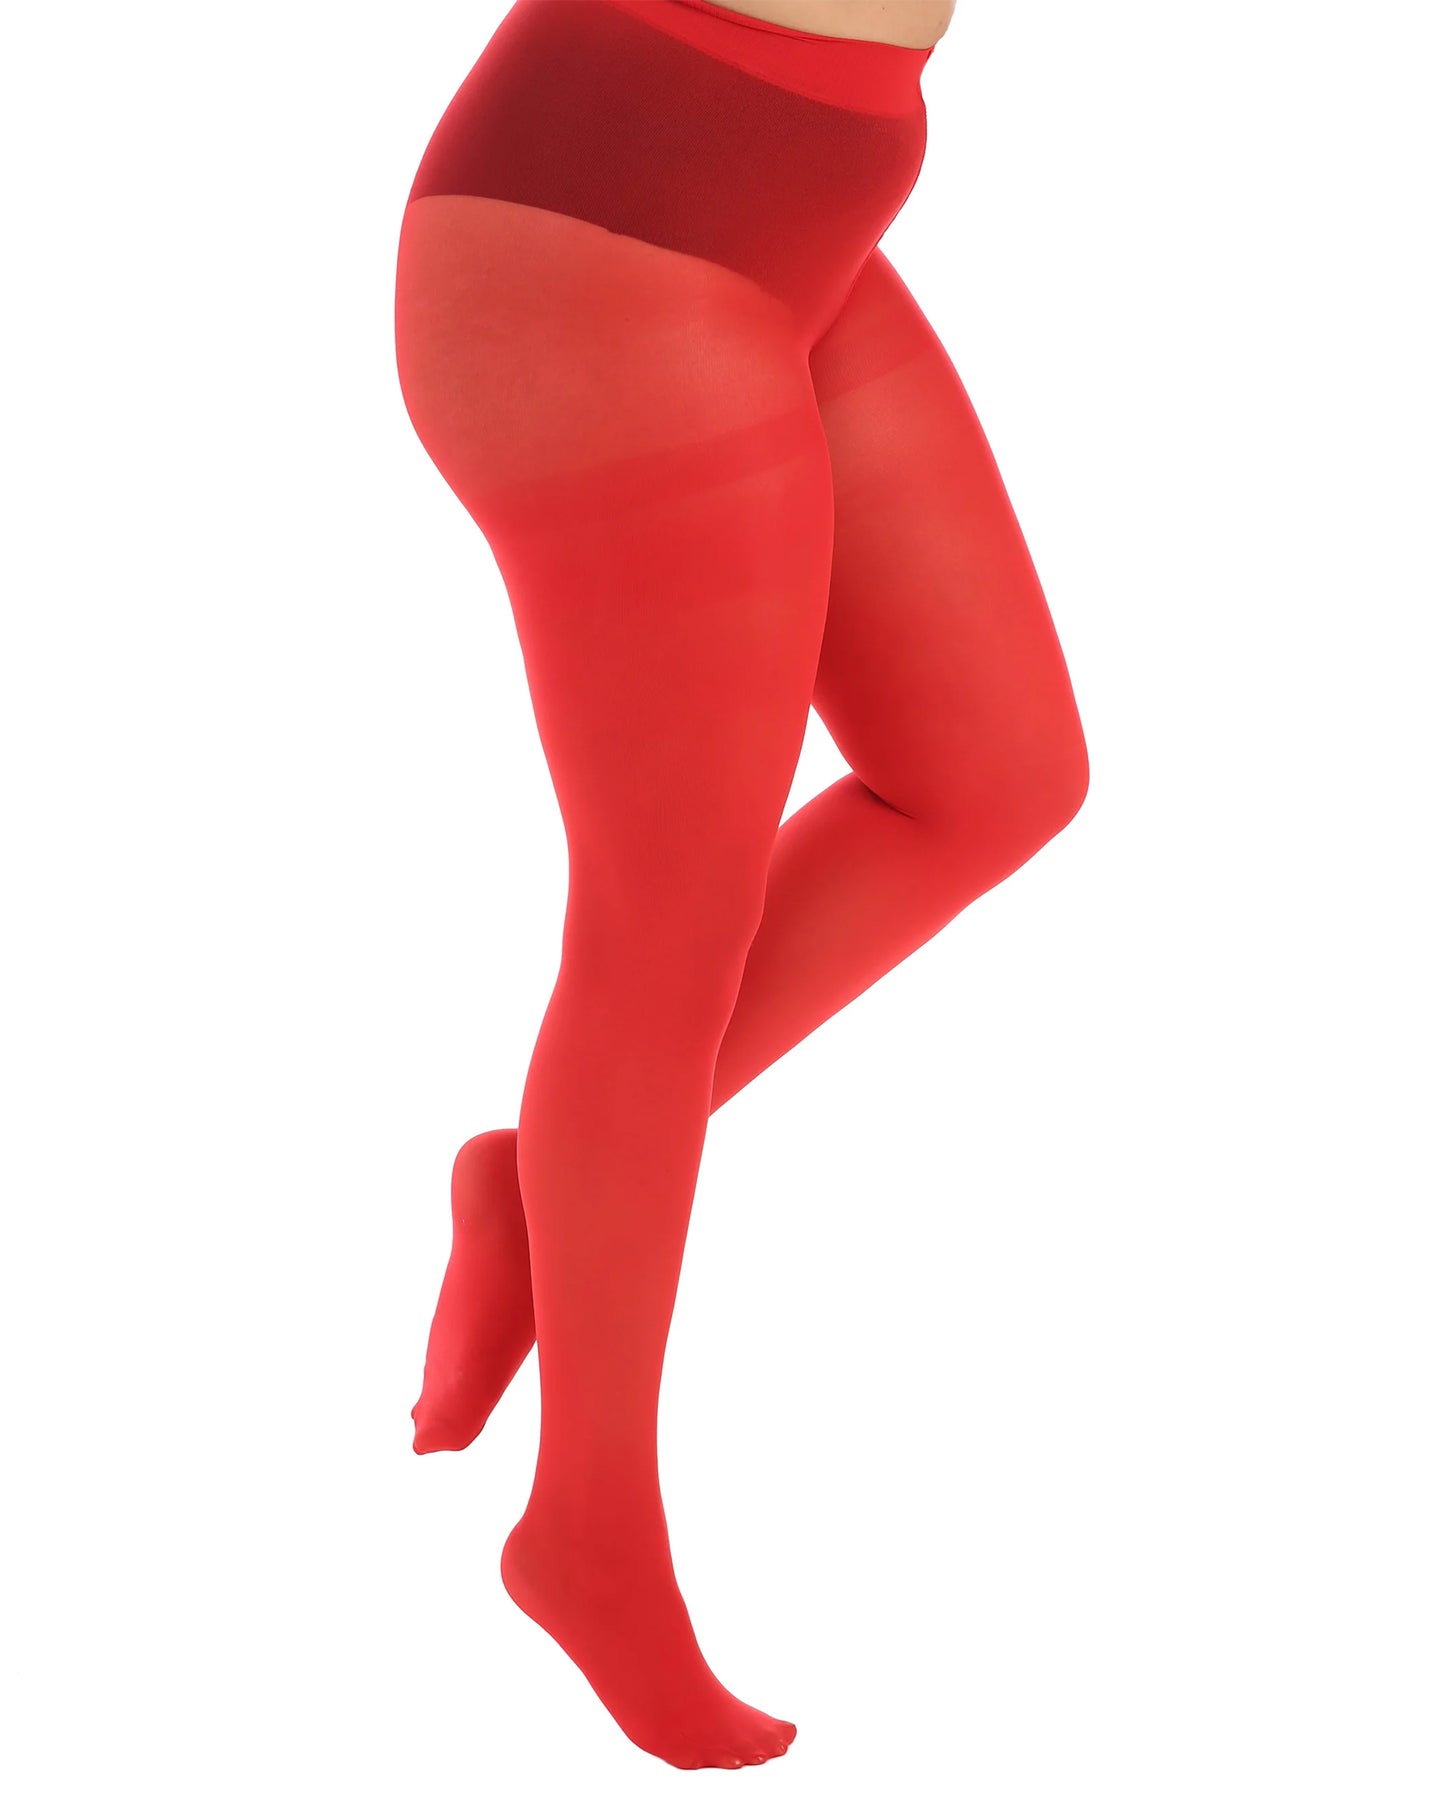 Pamela Mann Curvy Opaque Tights - Red super stretch 50 denier plus size tights with a high waist.